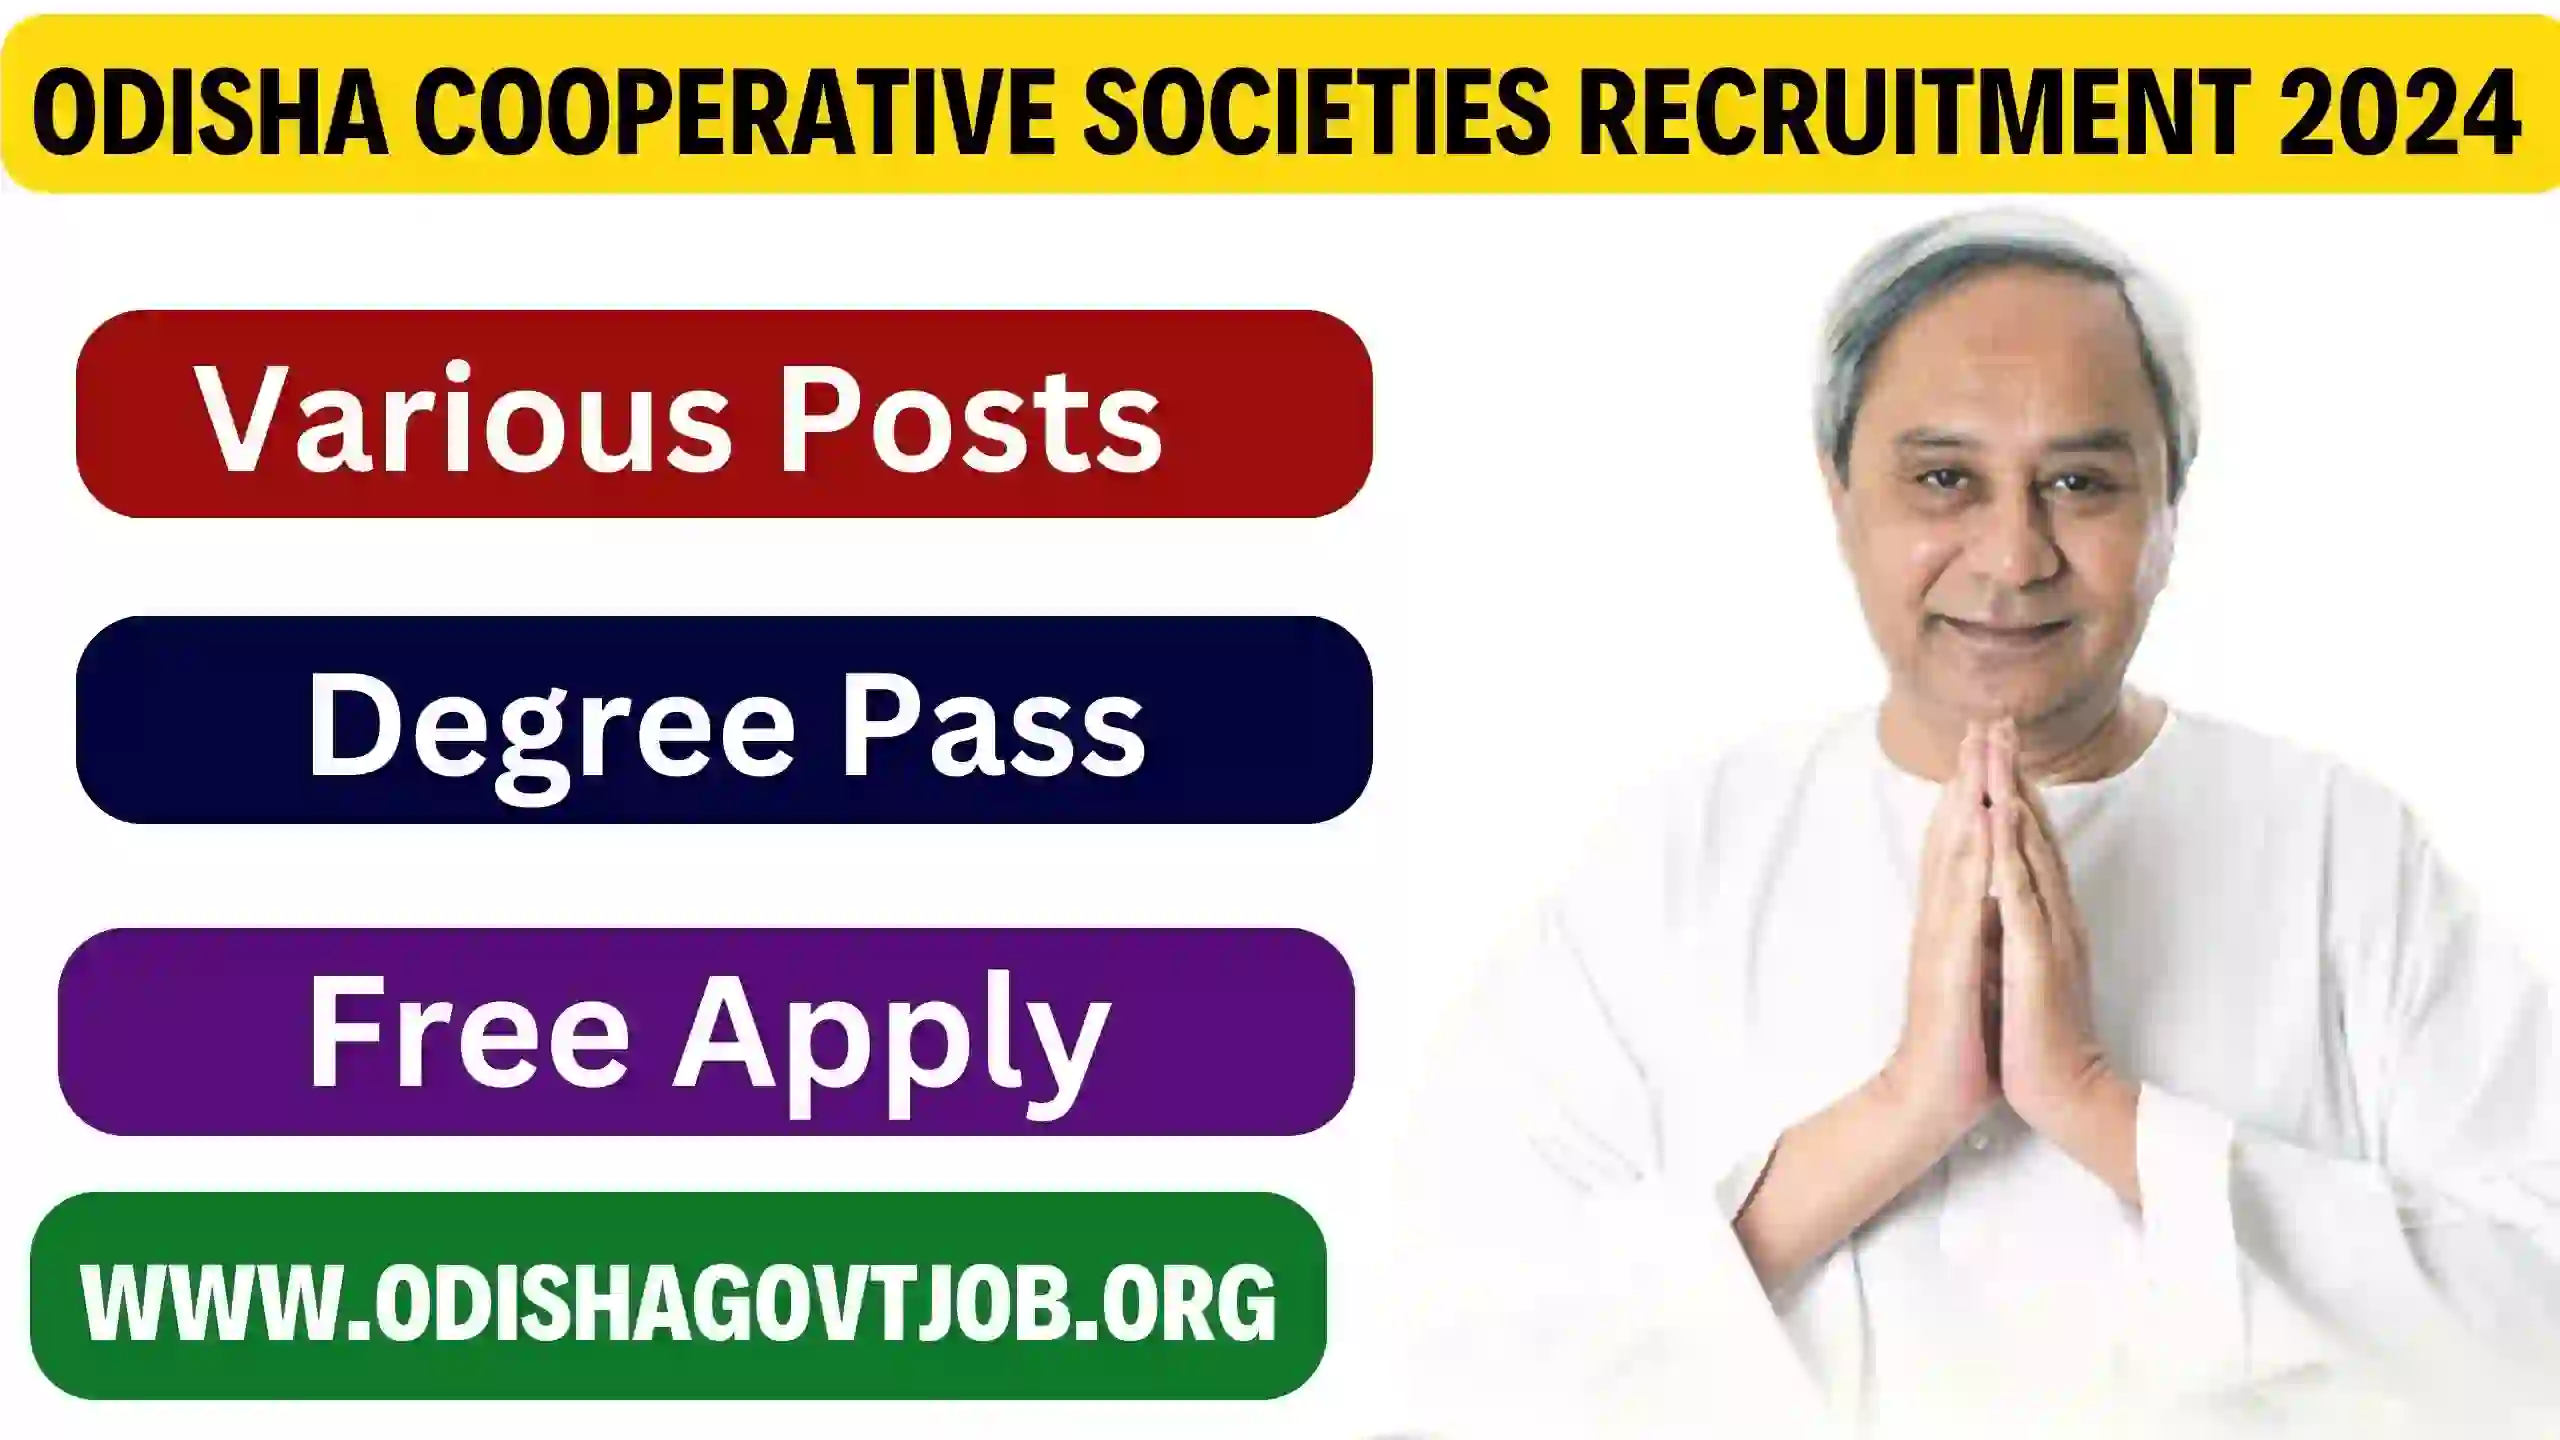 Odisha Cooperative Societies Recruitment 2024